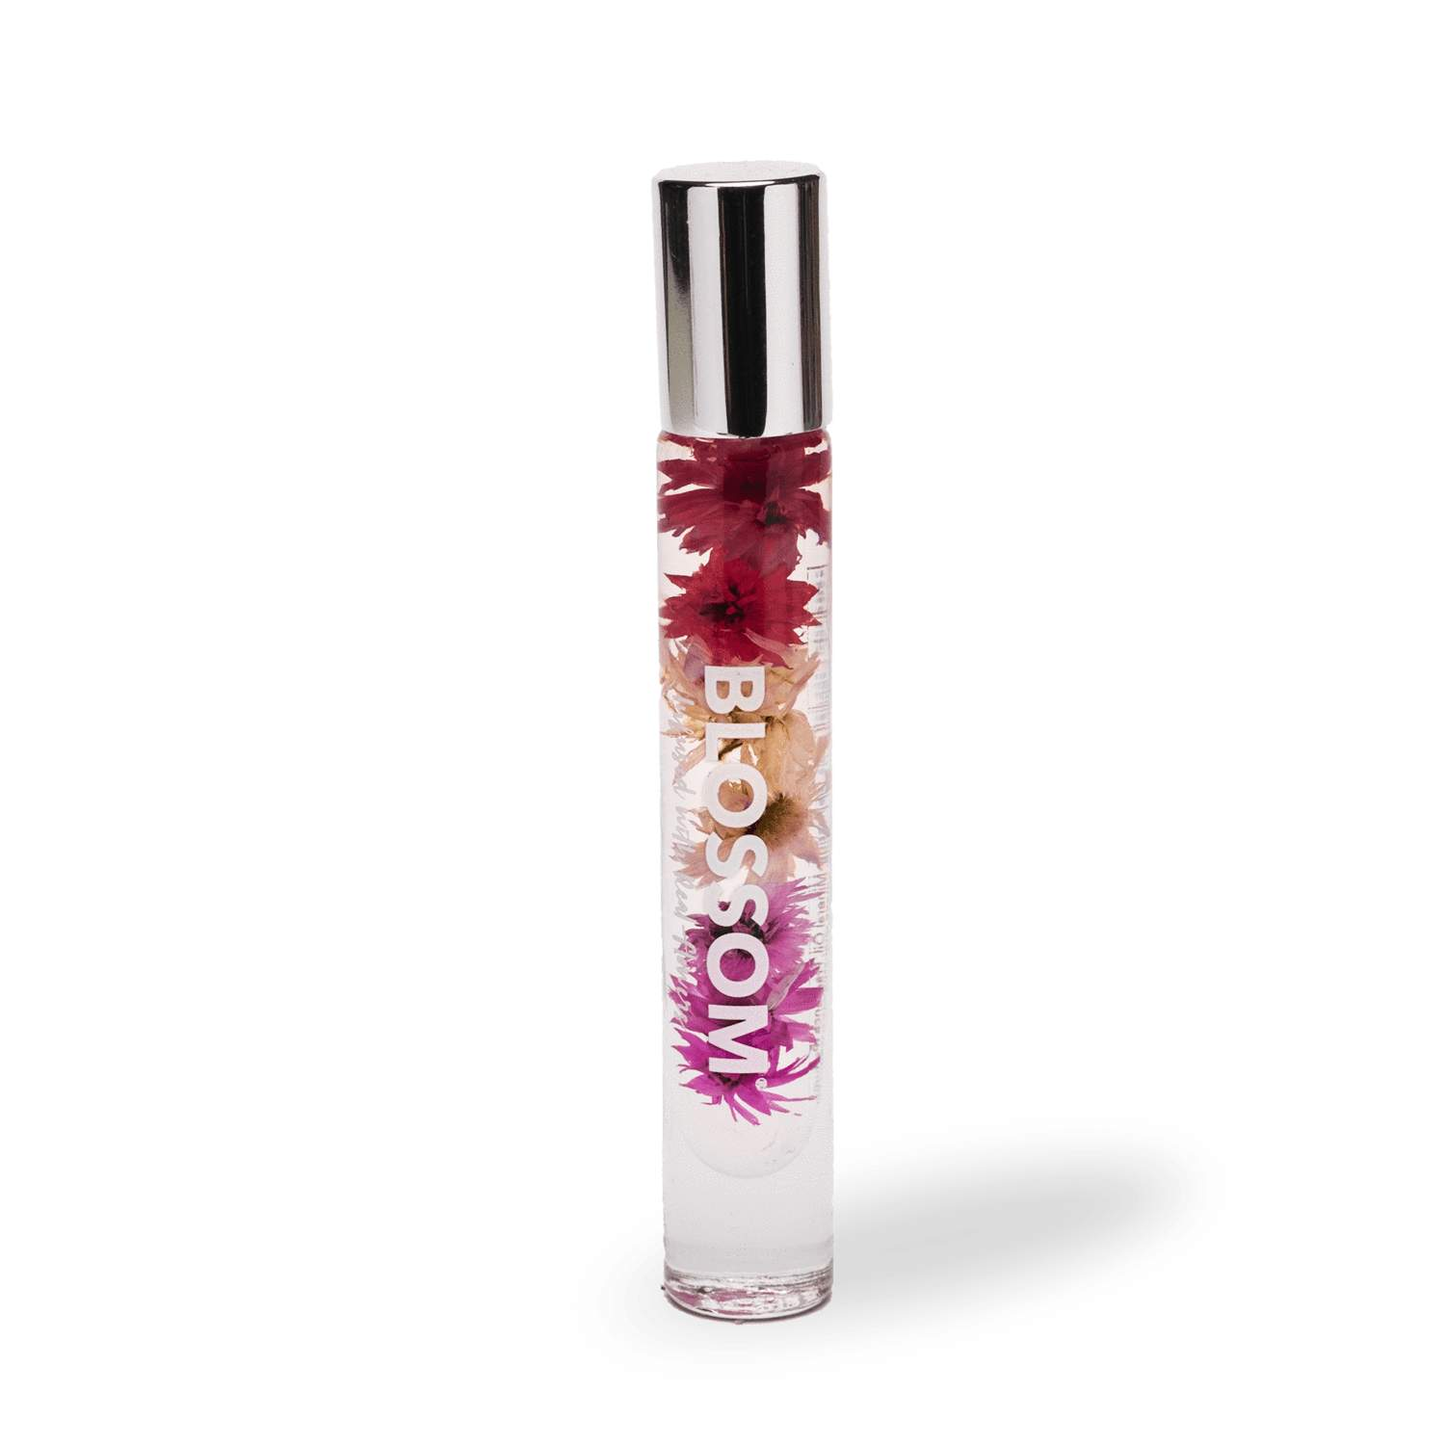 Blossom Roll-On Perfume Oil 0.20 fl oz (5.9 mL)-Blossom-Blossom_Perfume's,Brand_Blossom,Collection_Fragrance,Fragrance_Rollers,Fragrance_Women